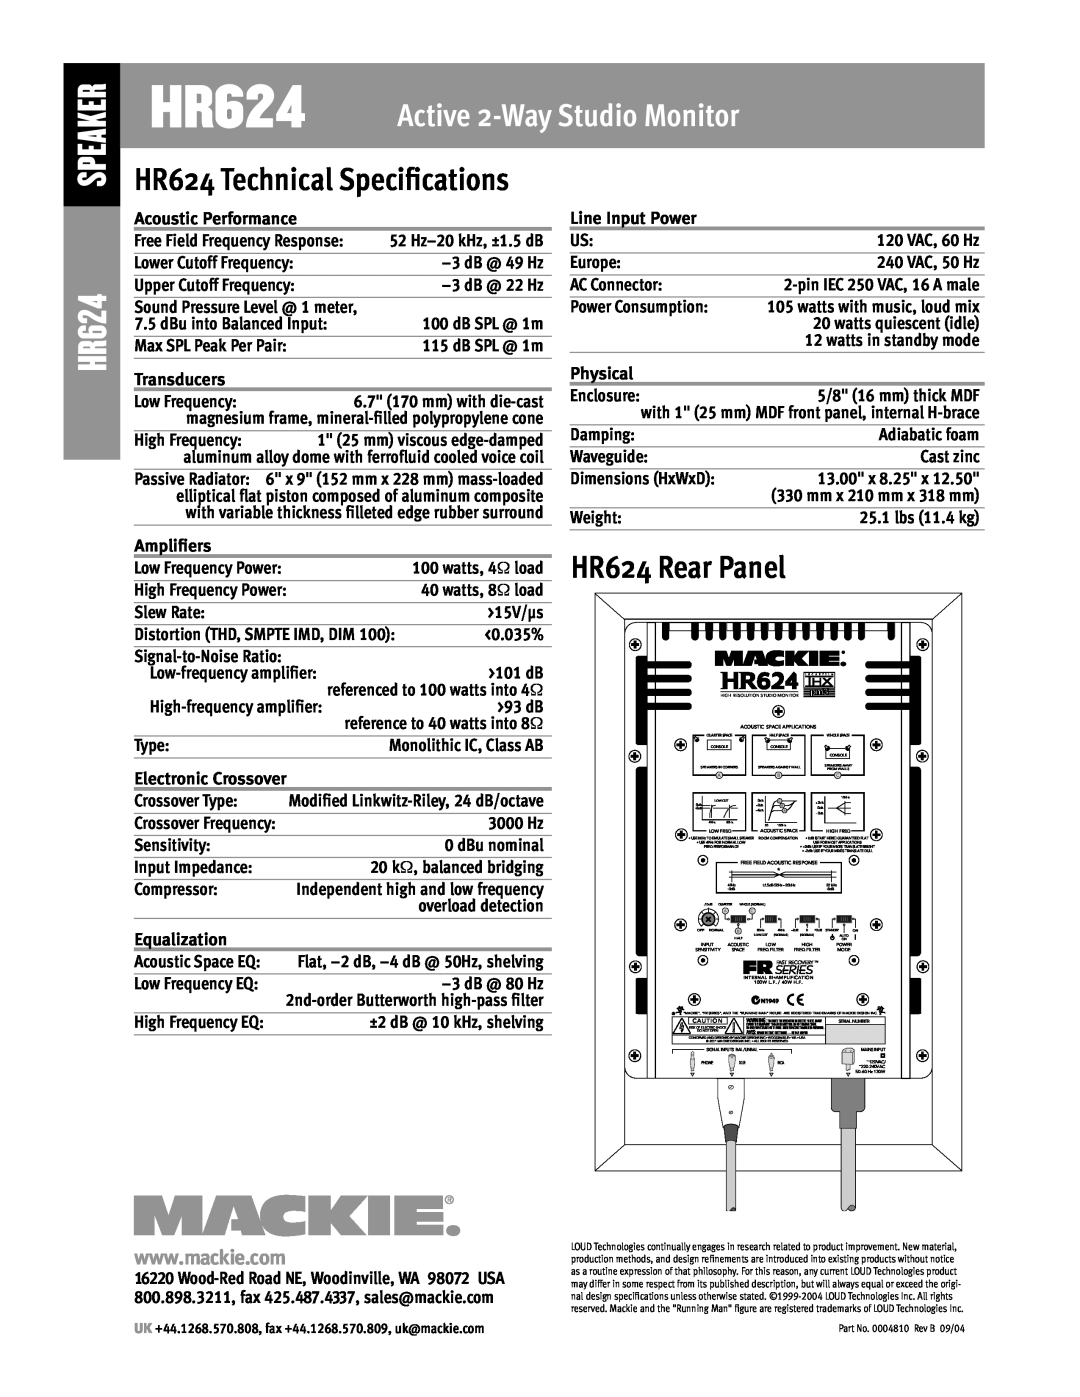 Mackie manual HR624 Rear Panel, Speaker, HR624 Active 2-WayStudio Monitor, HR624 Technical Specifications 